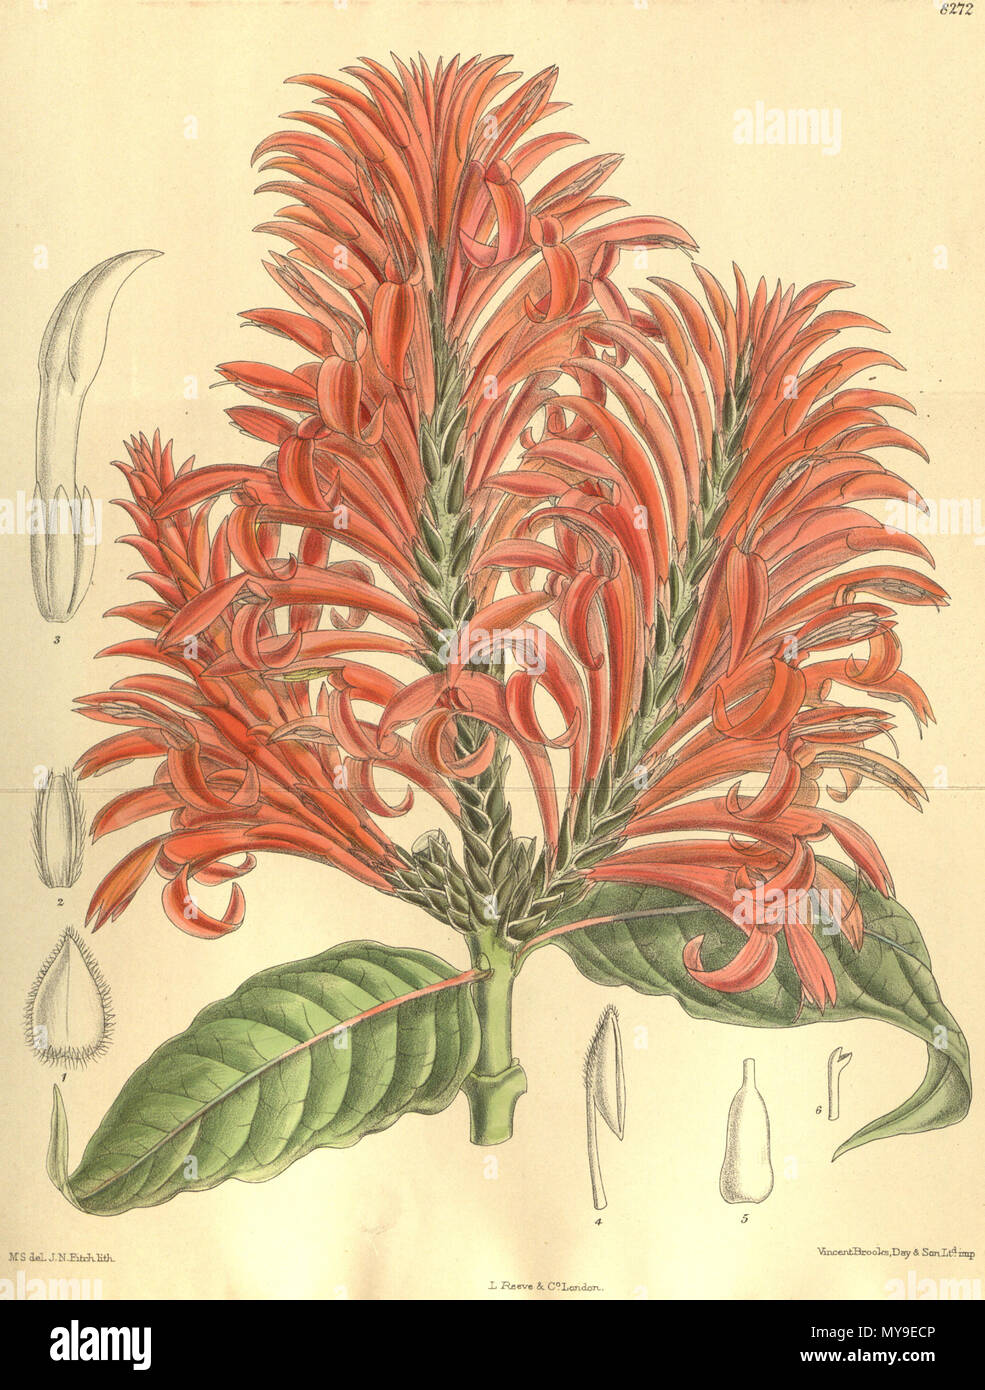 . Aphelandra tetragona, Acanthaceae . 1909. M.S. del., J.N.Fitch lith. 46 Aphelandra tetragona 135-8272 Stock Photo